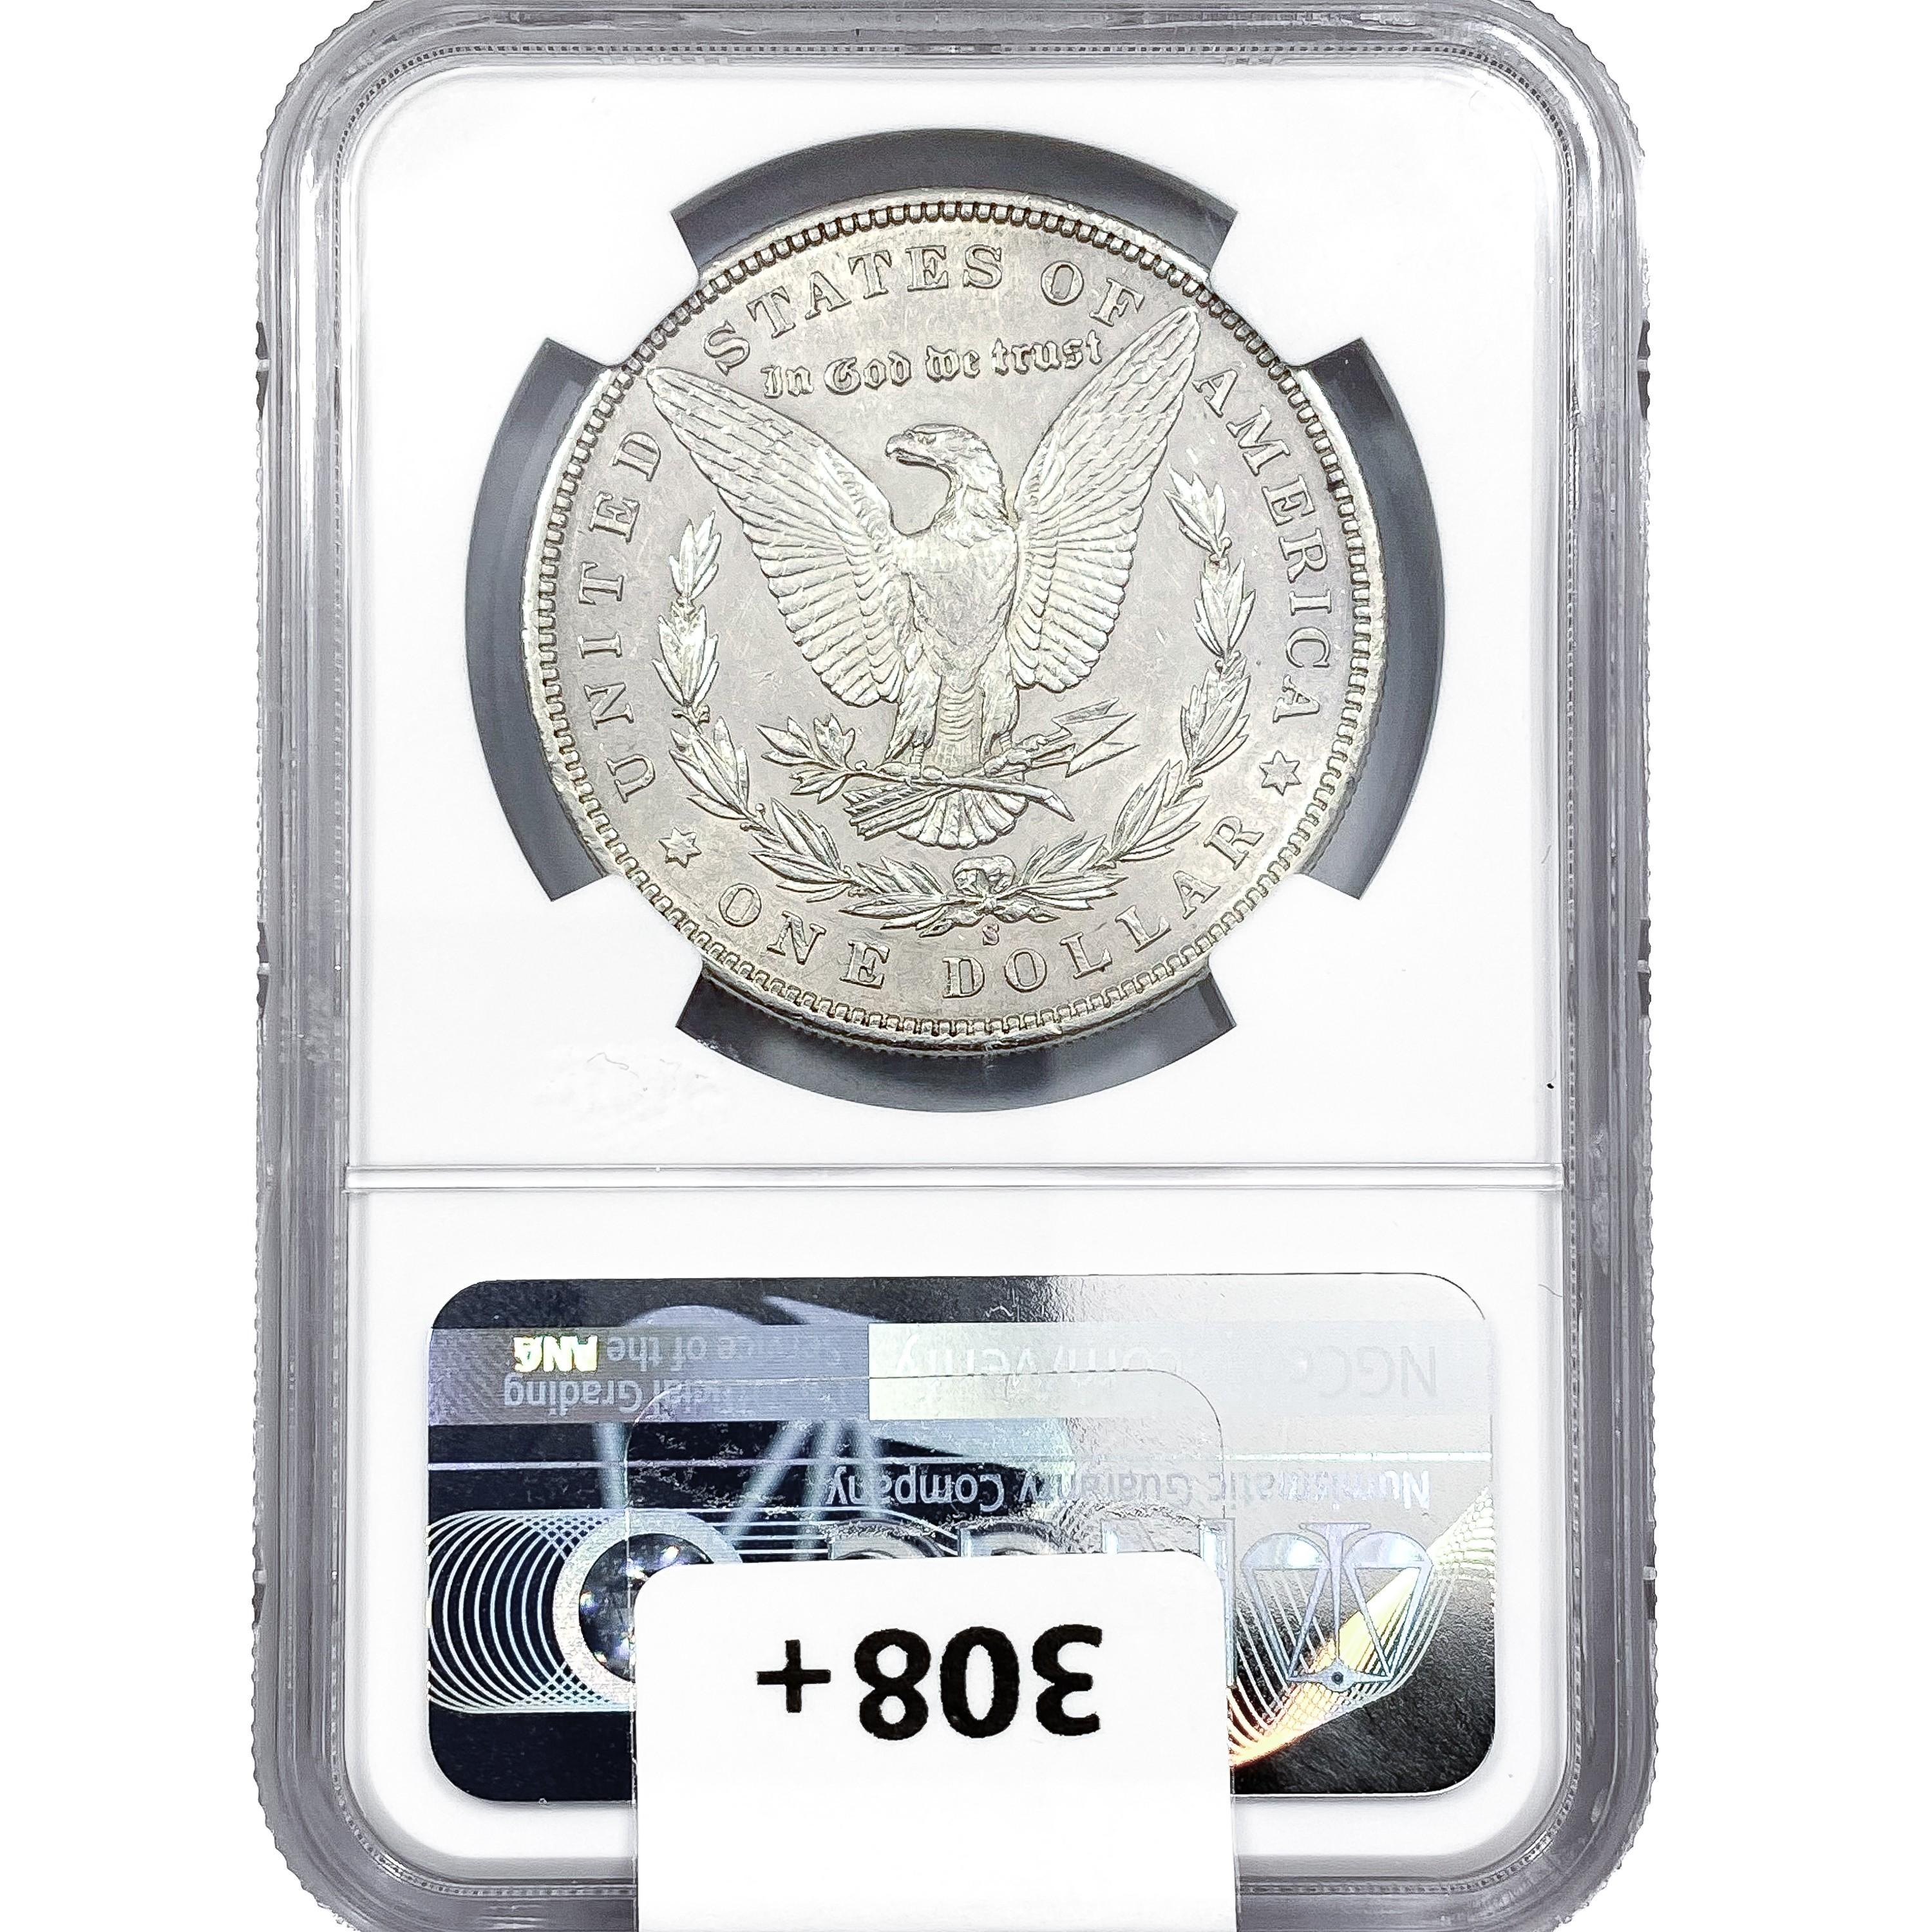 1892-S Morgan Silver Dollar NGC AU55